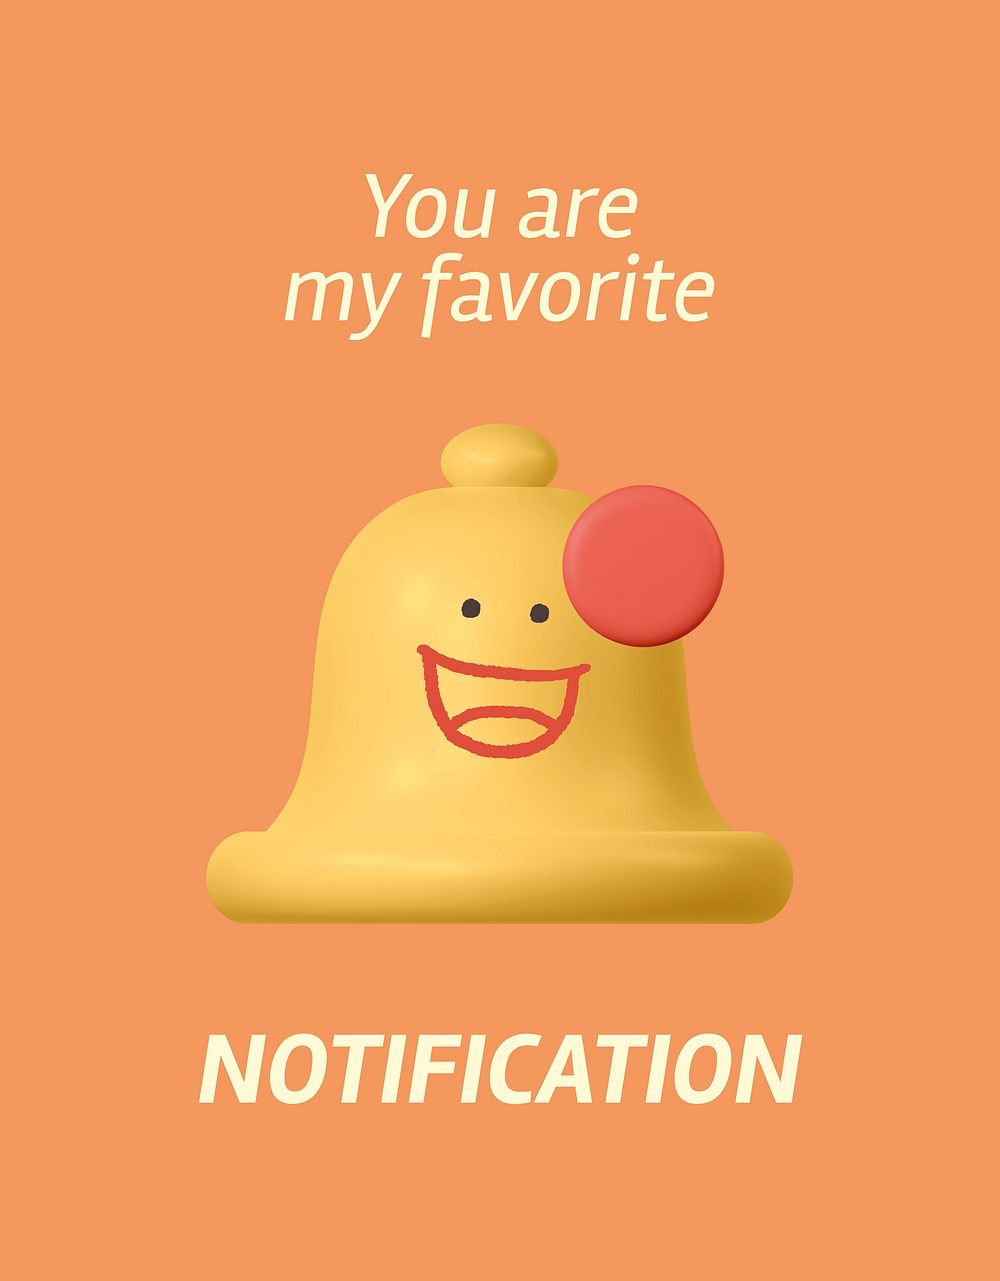 Favorite notification flyer template, 3D bell illustration vector